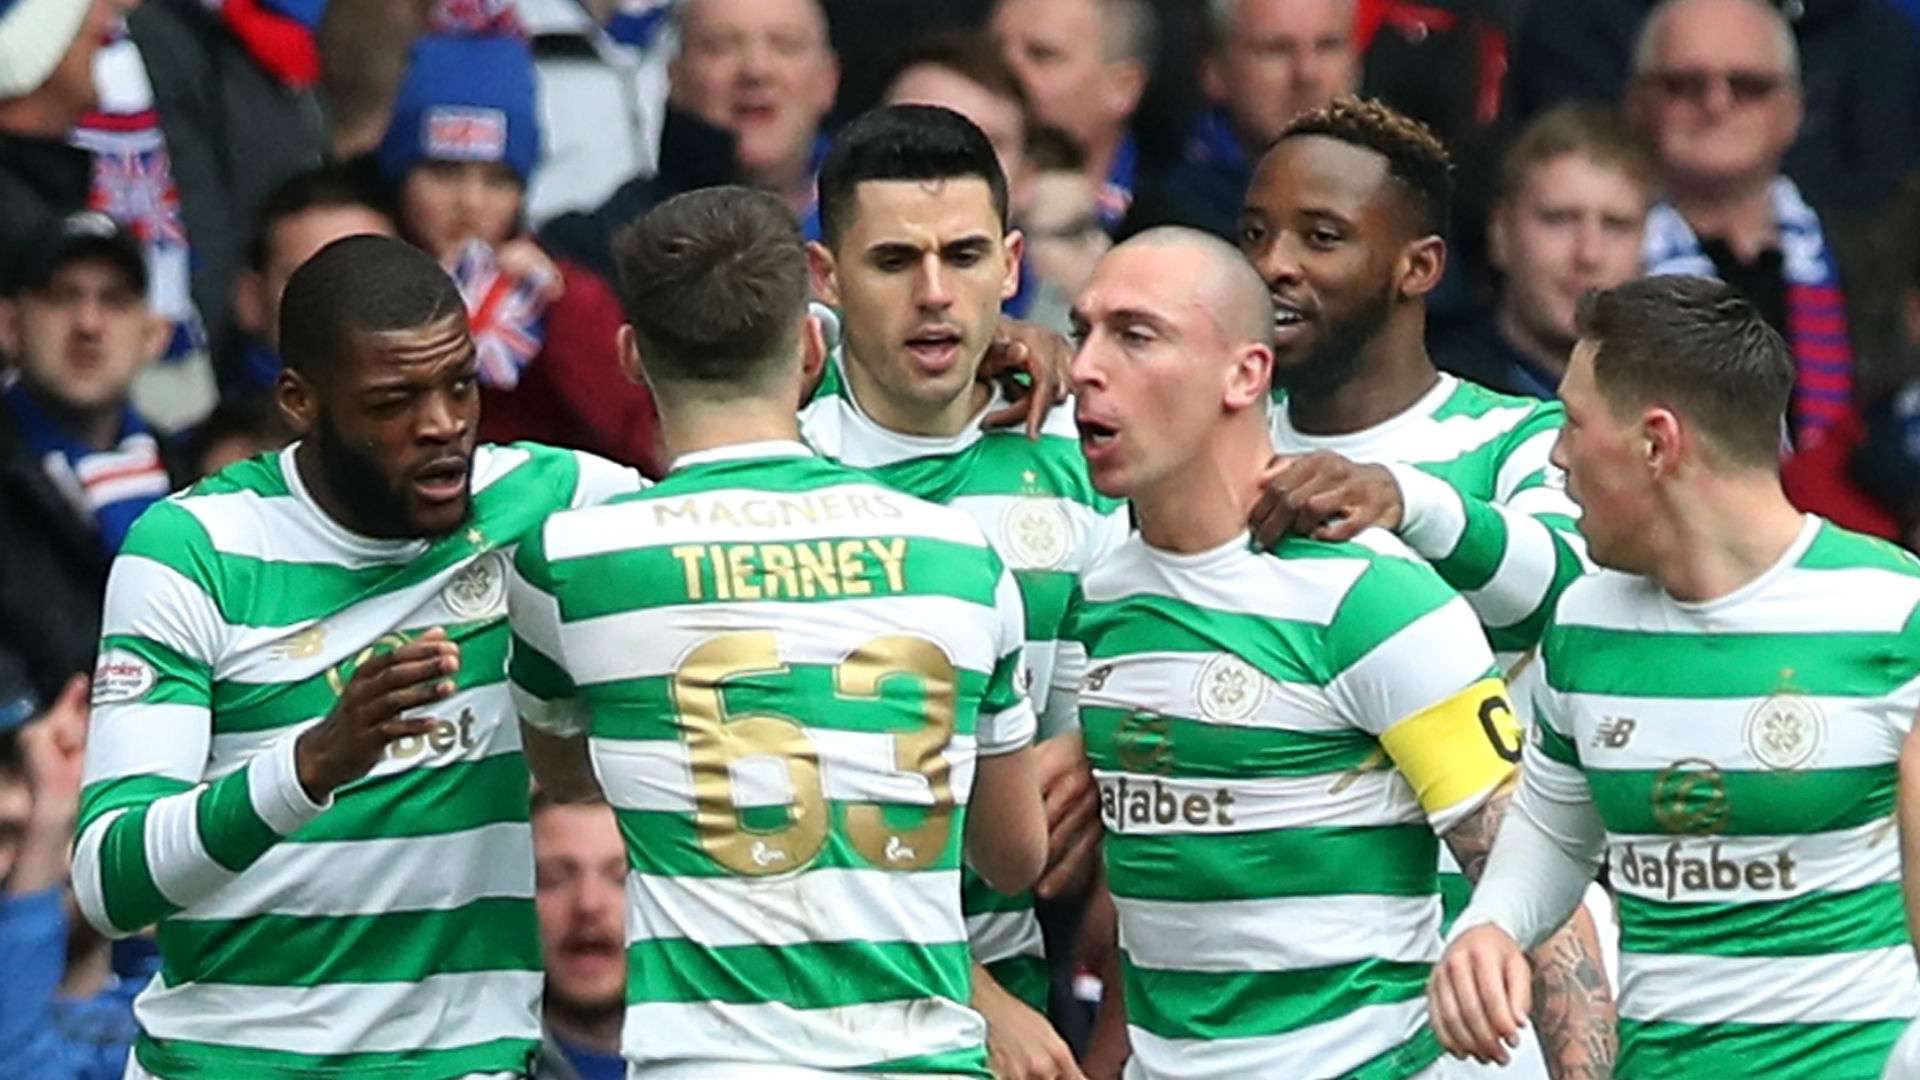 Celtic celebrate vs Rangers